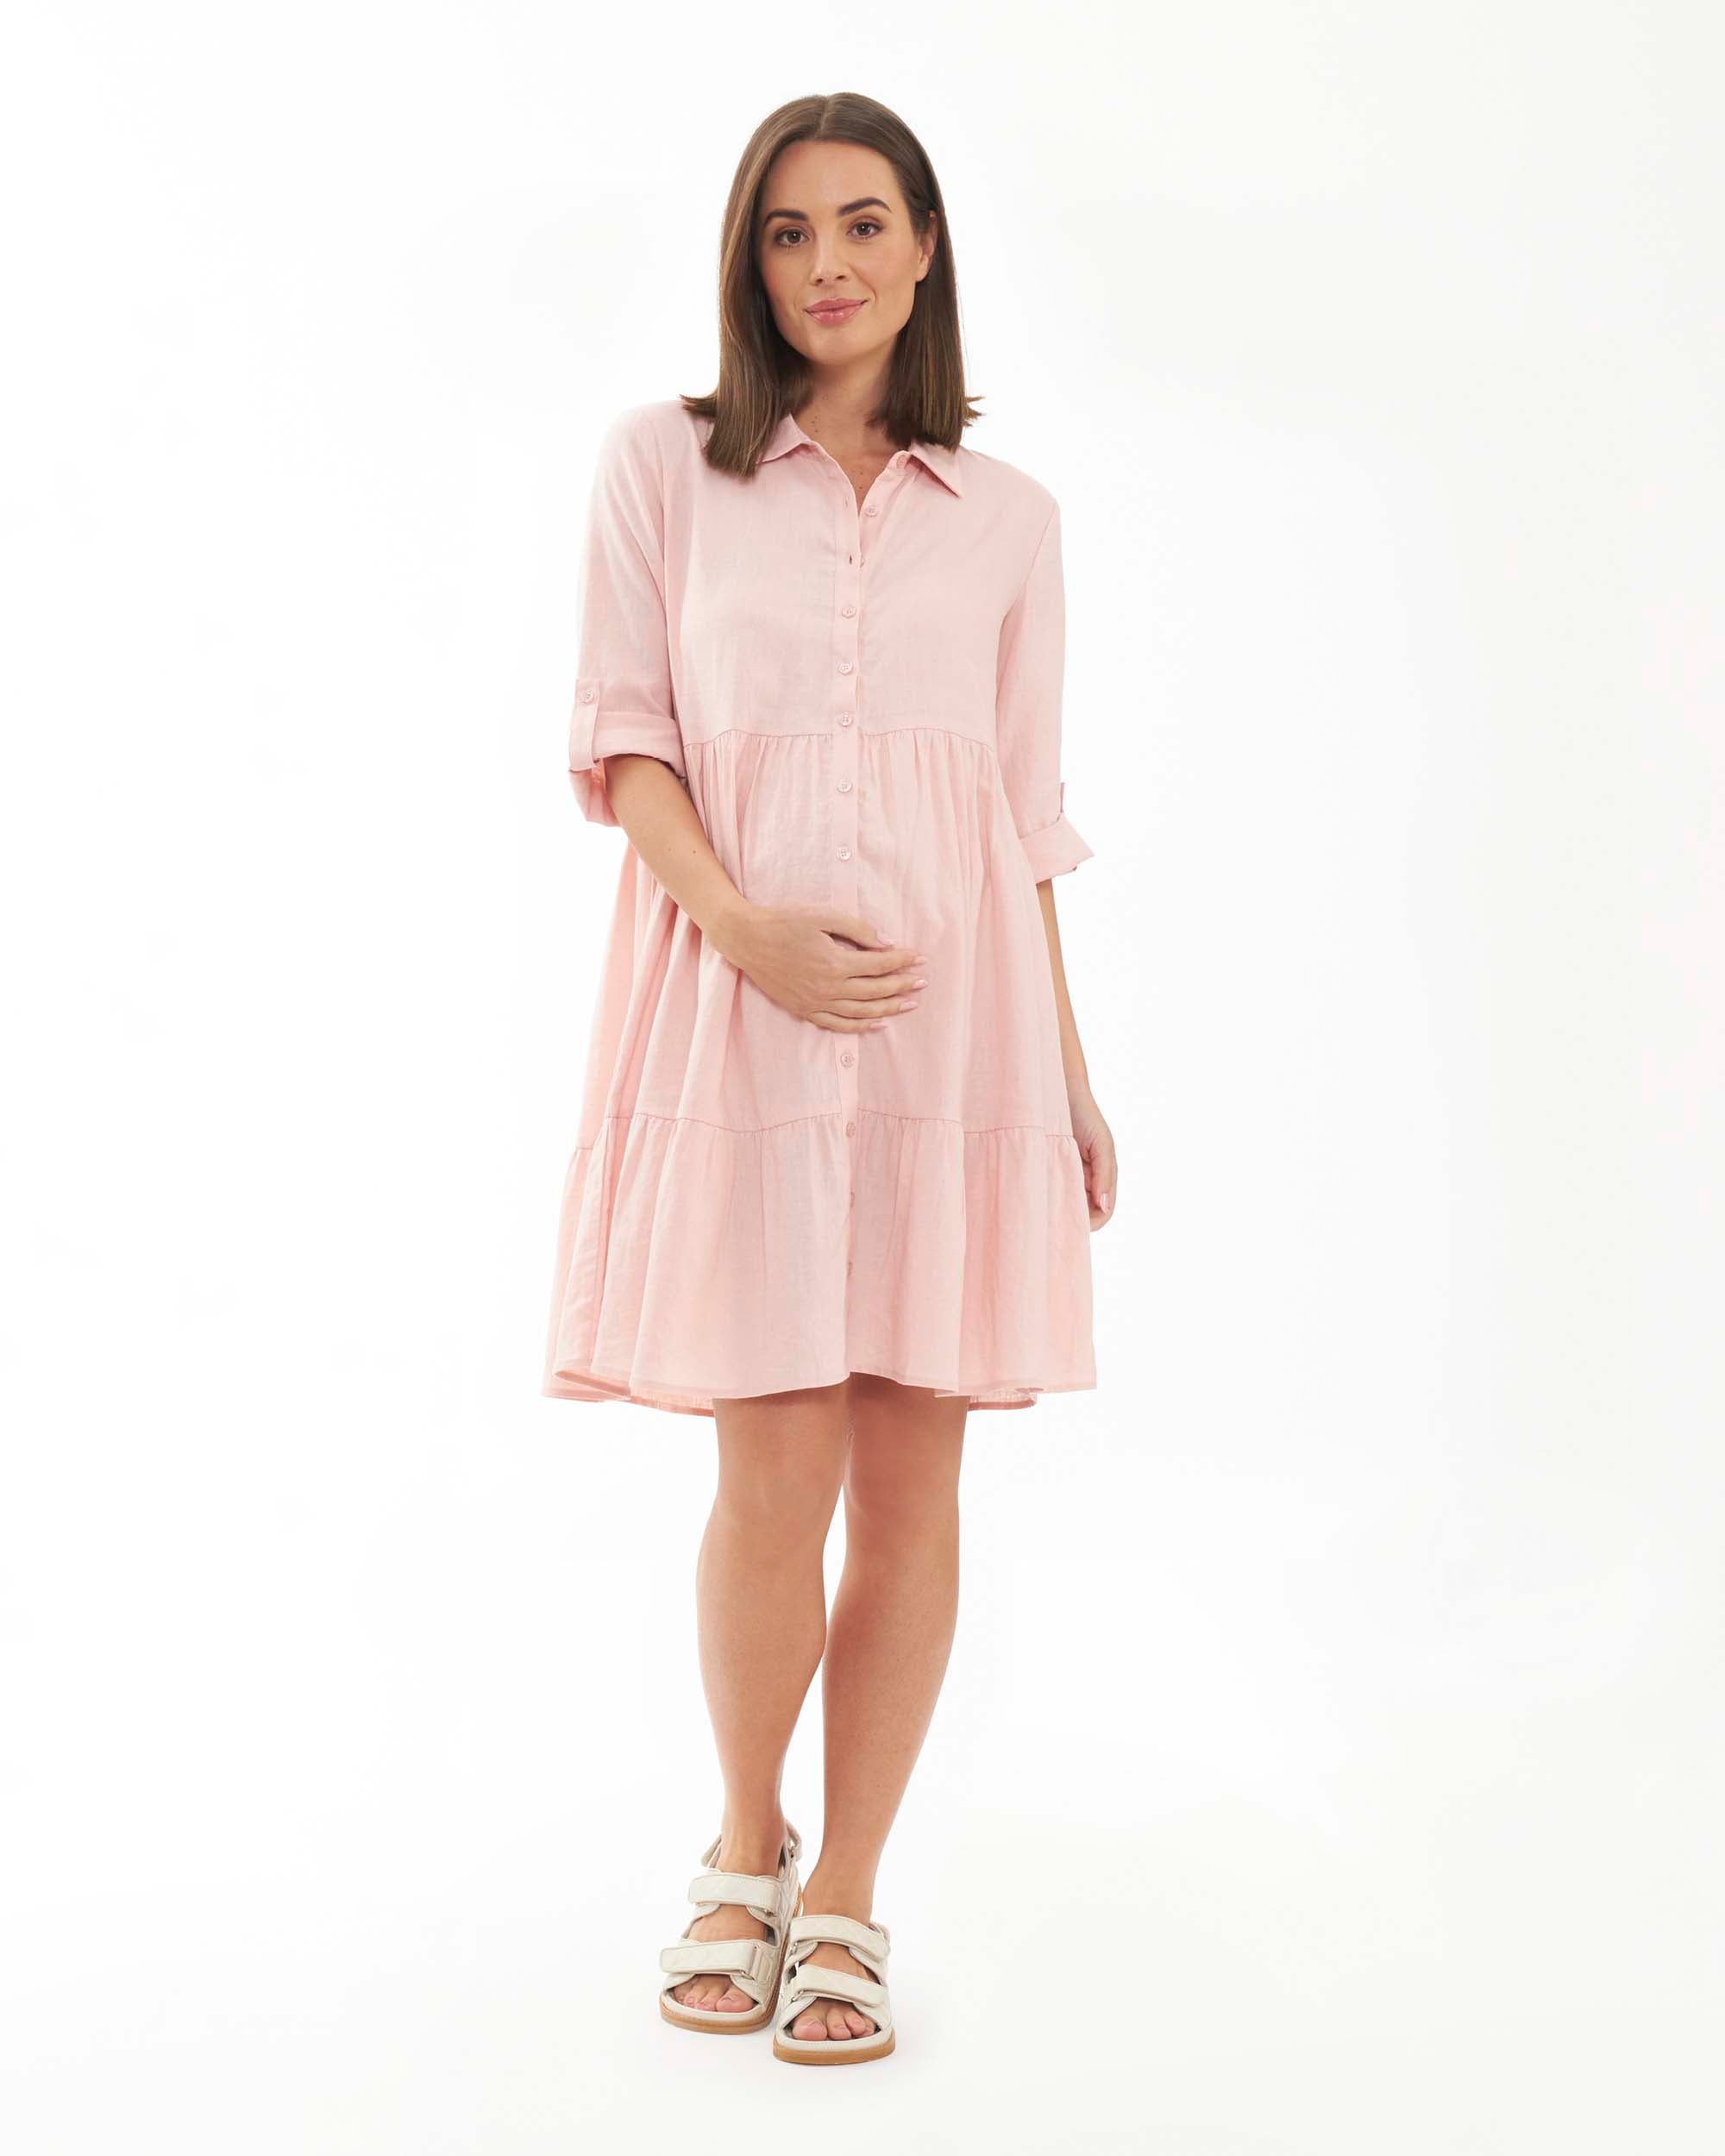 Ripe Maternity 'Adel' Linen Dress - Soft Pink